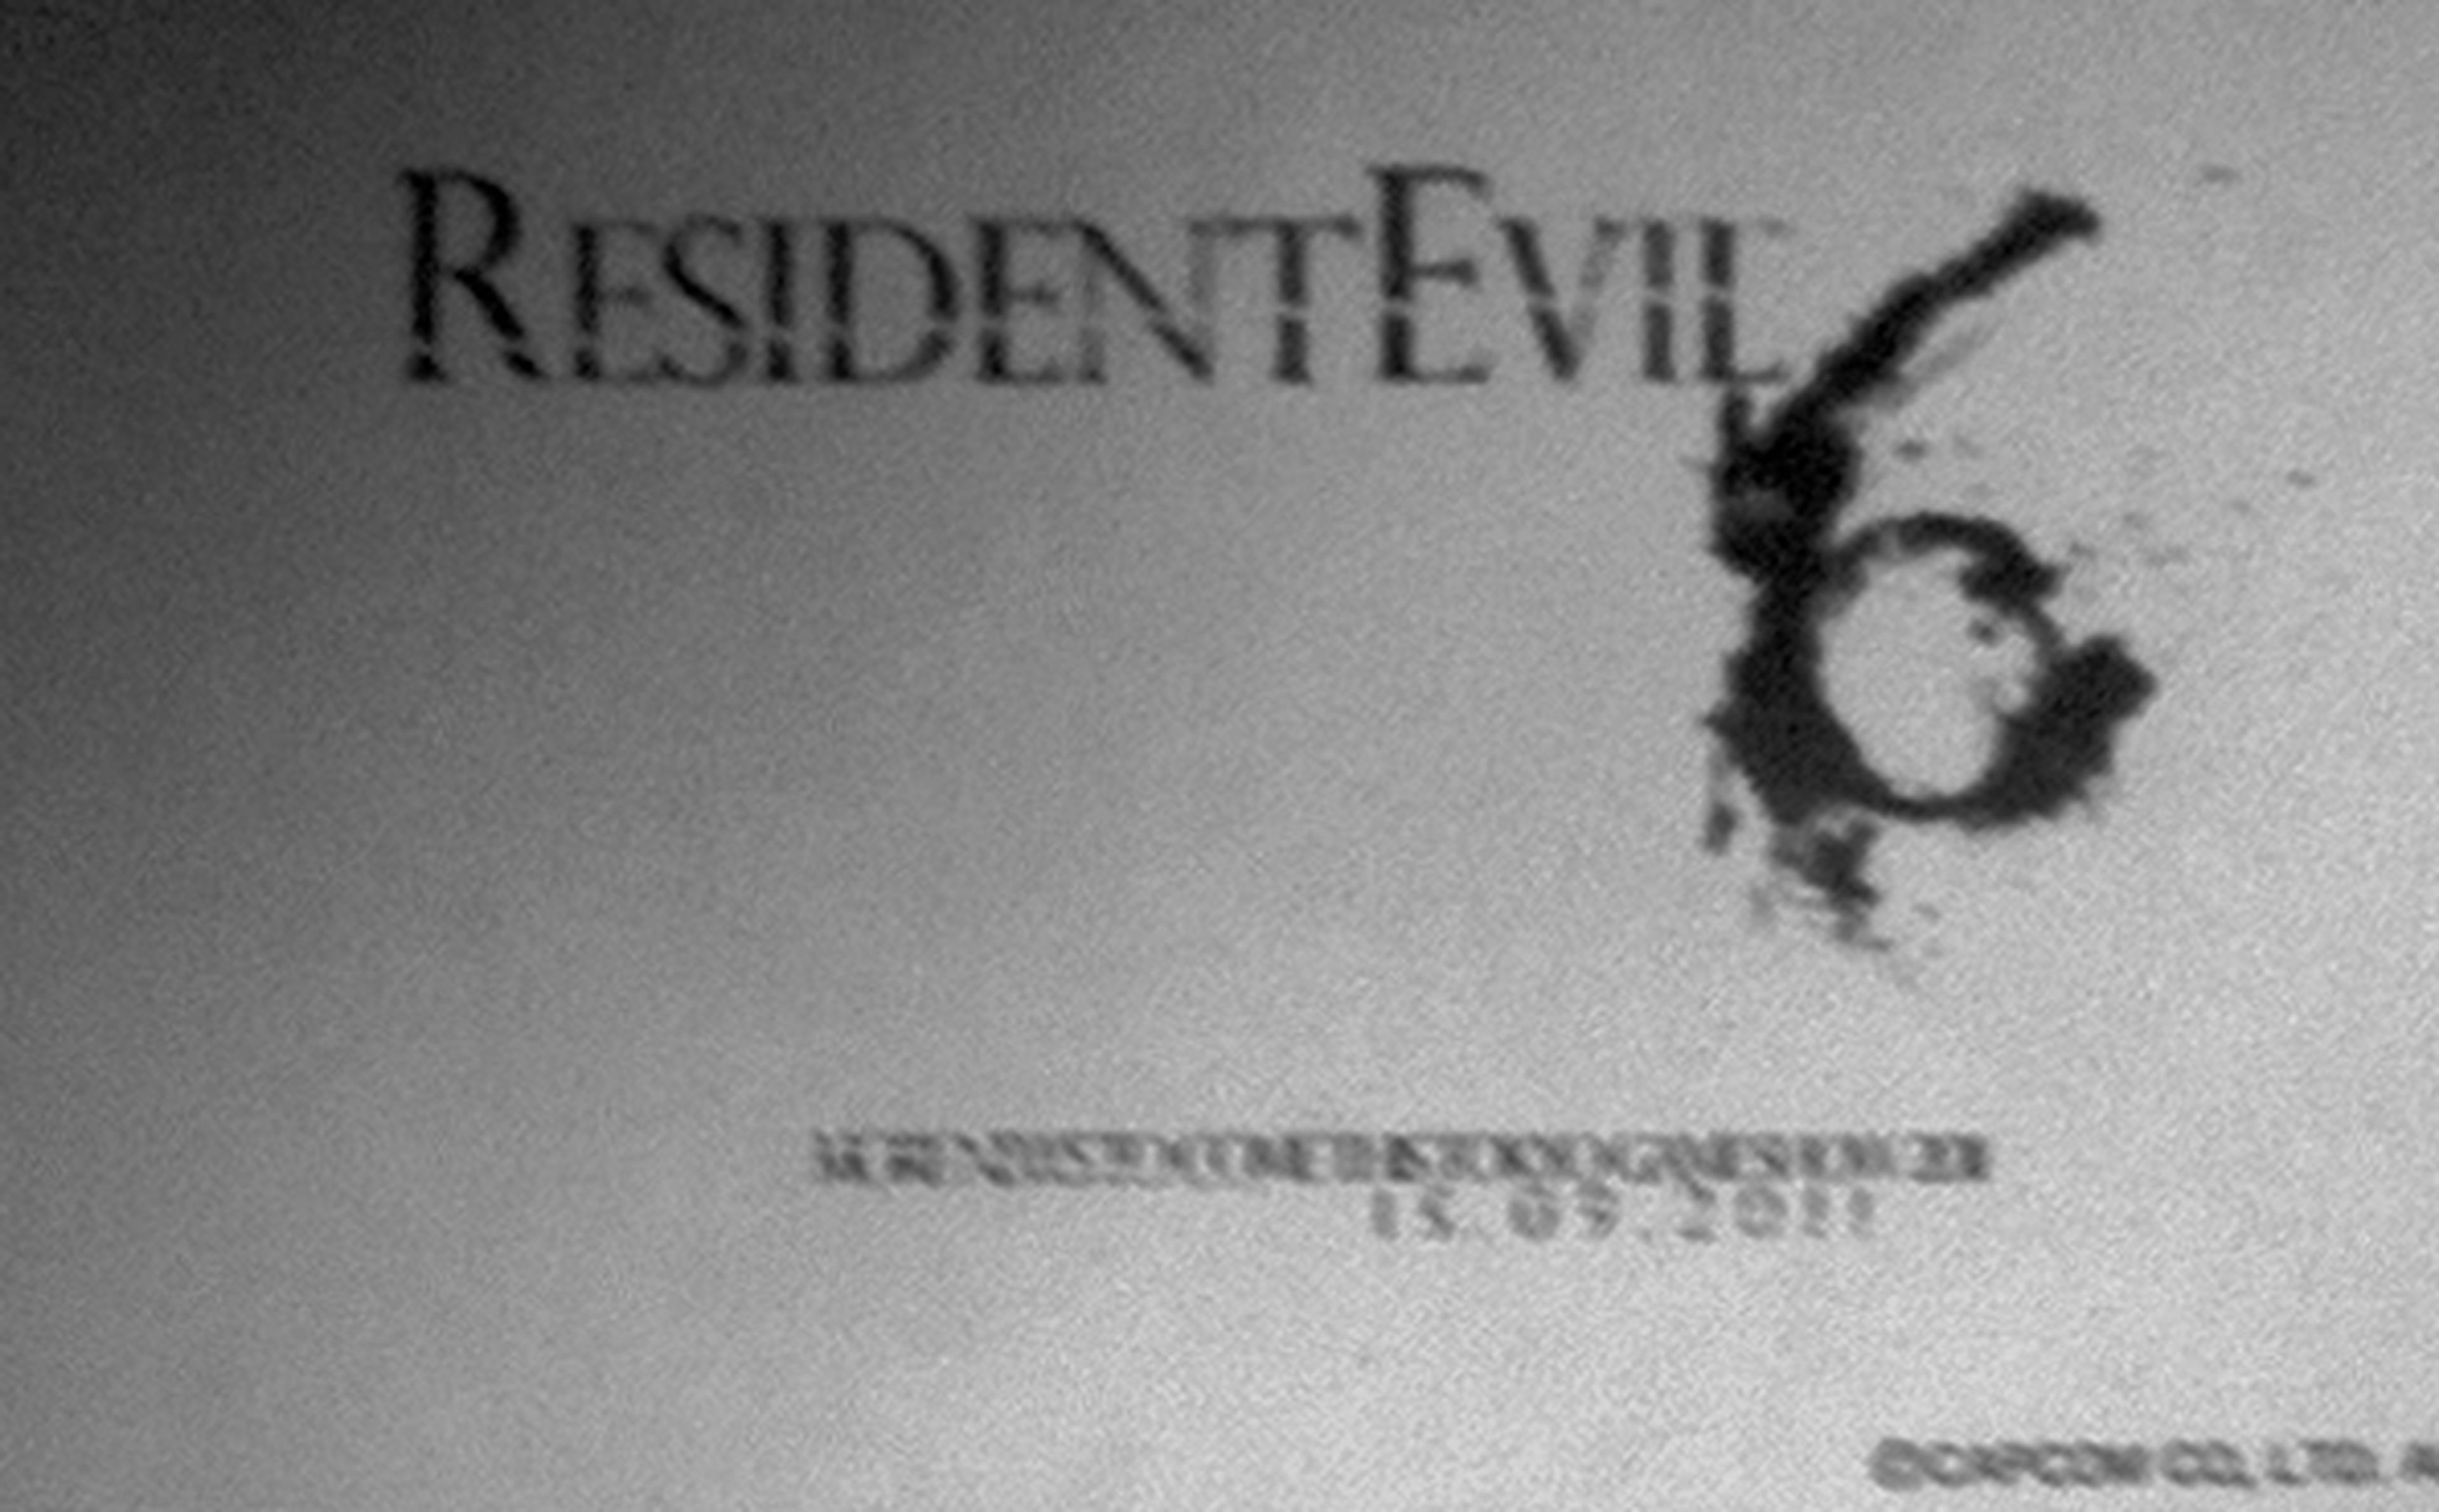 ¿Veremos Resident Evil 6 en septiembre?